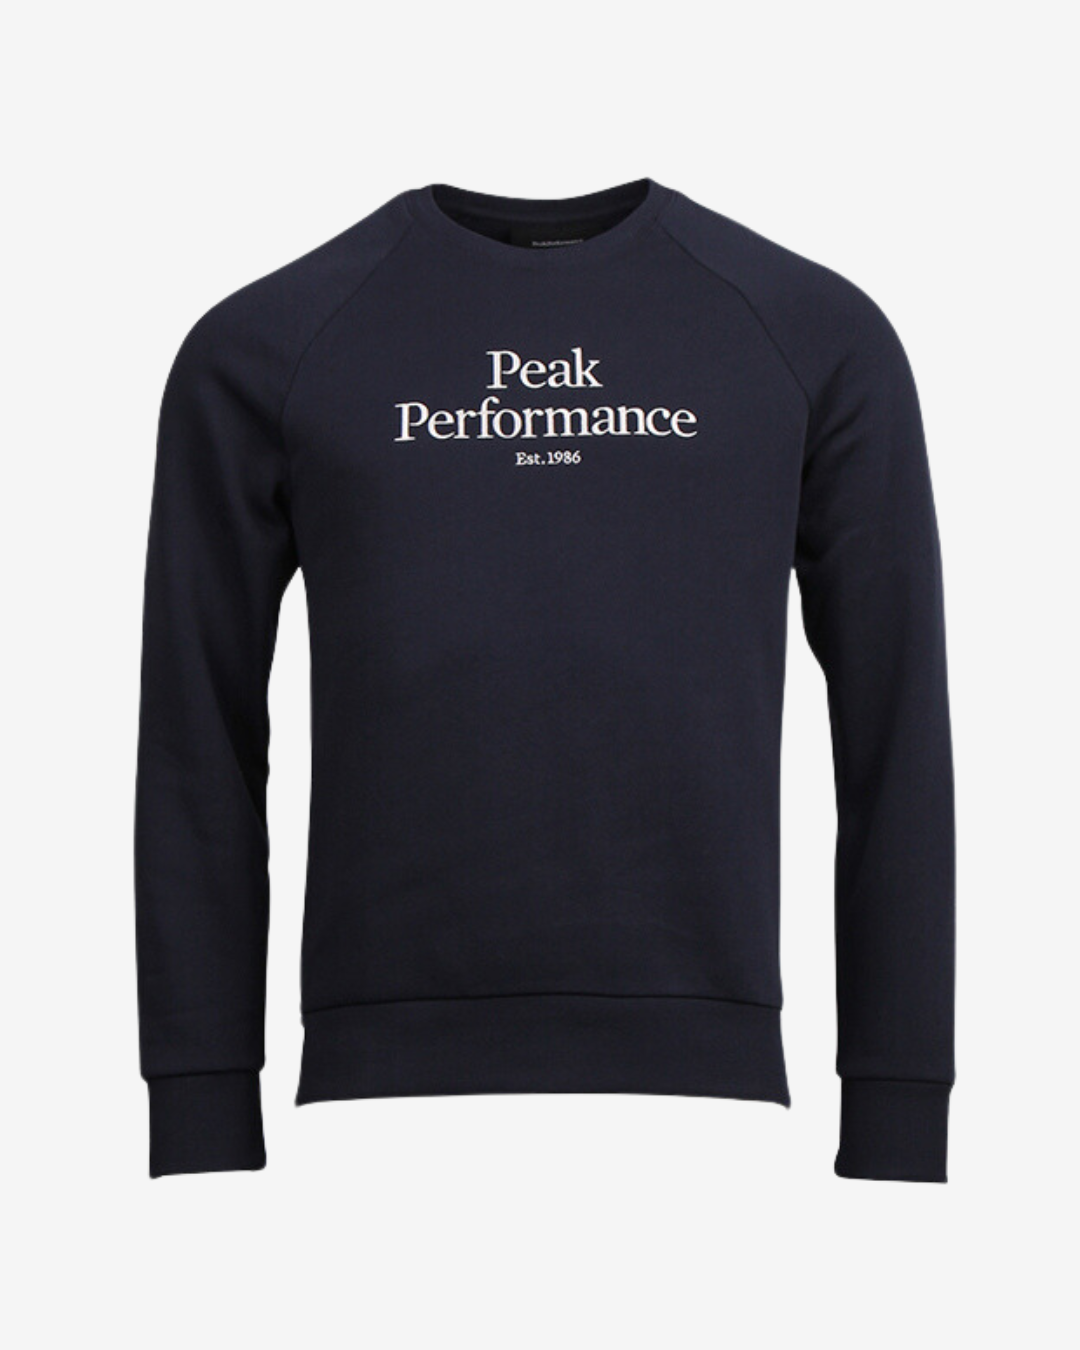 Se Peak Performance Original stor logo sweatshirt - Navy - Str. L - Modish.dk hos Modish.dk